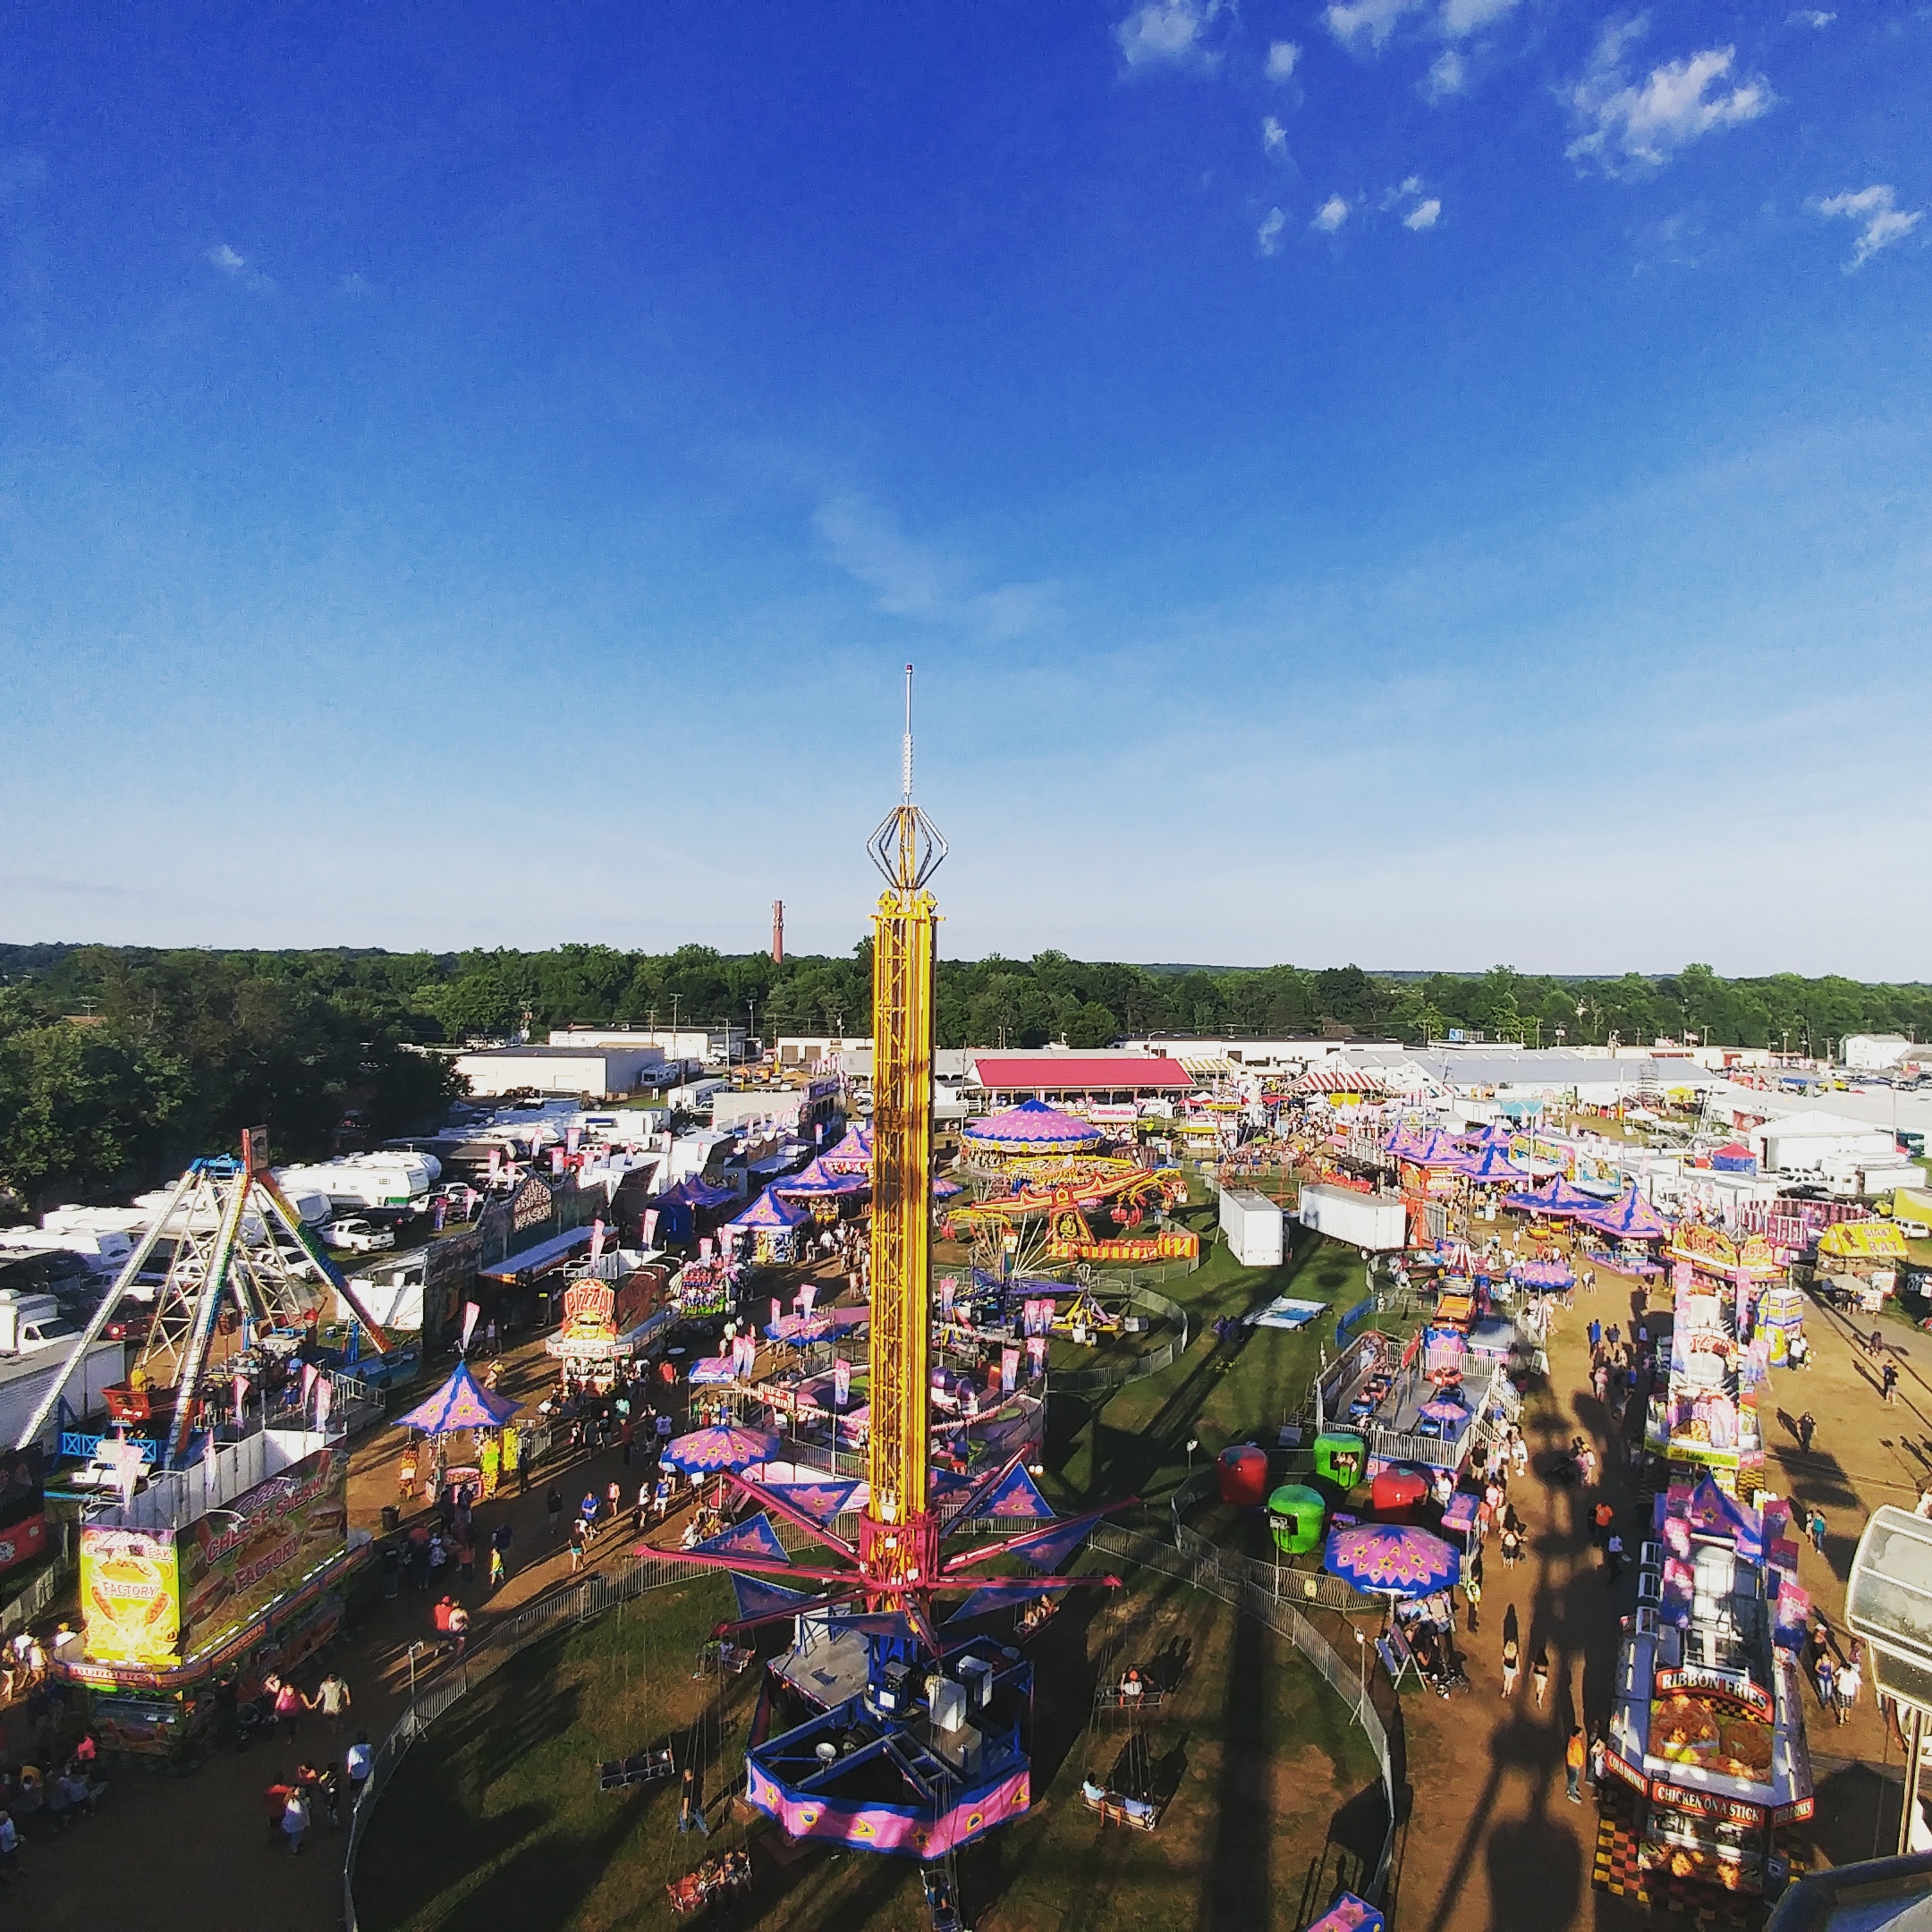 The Fredericksburg Fair